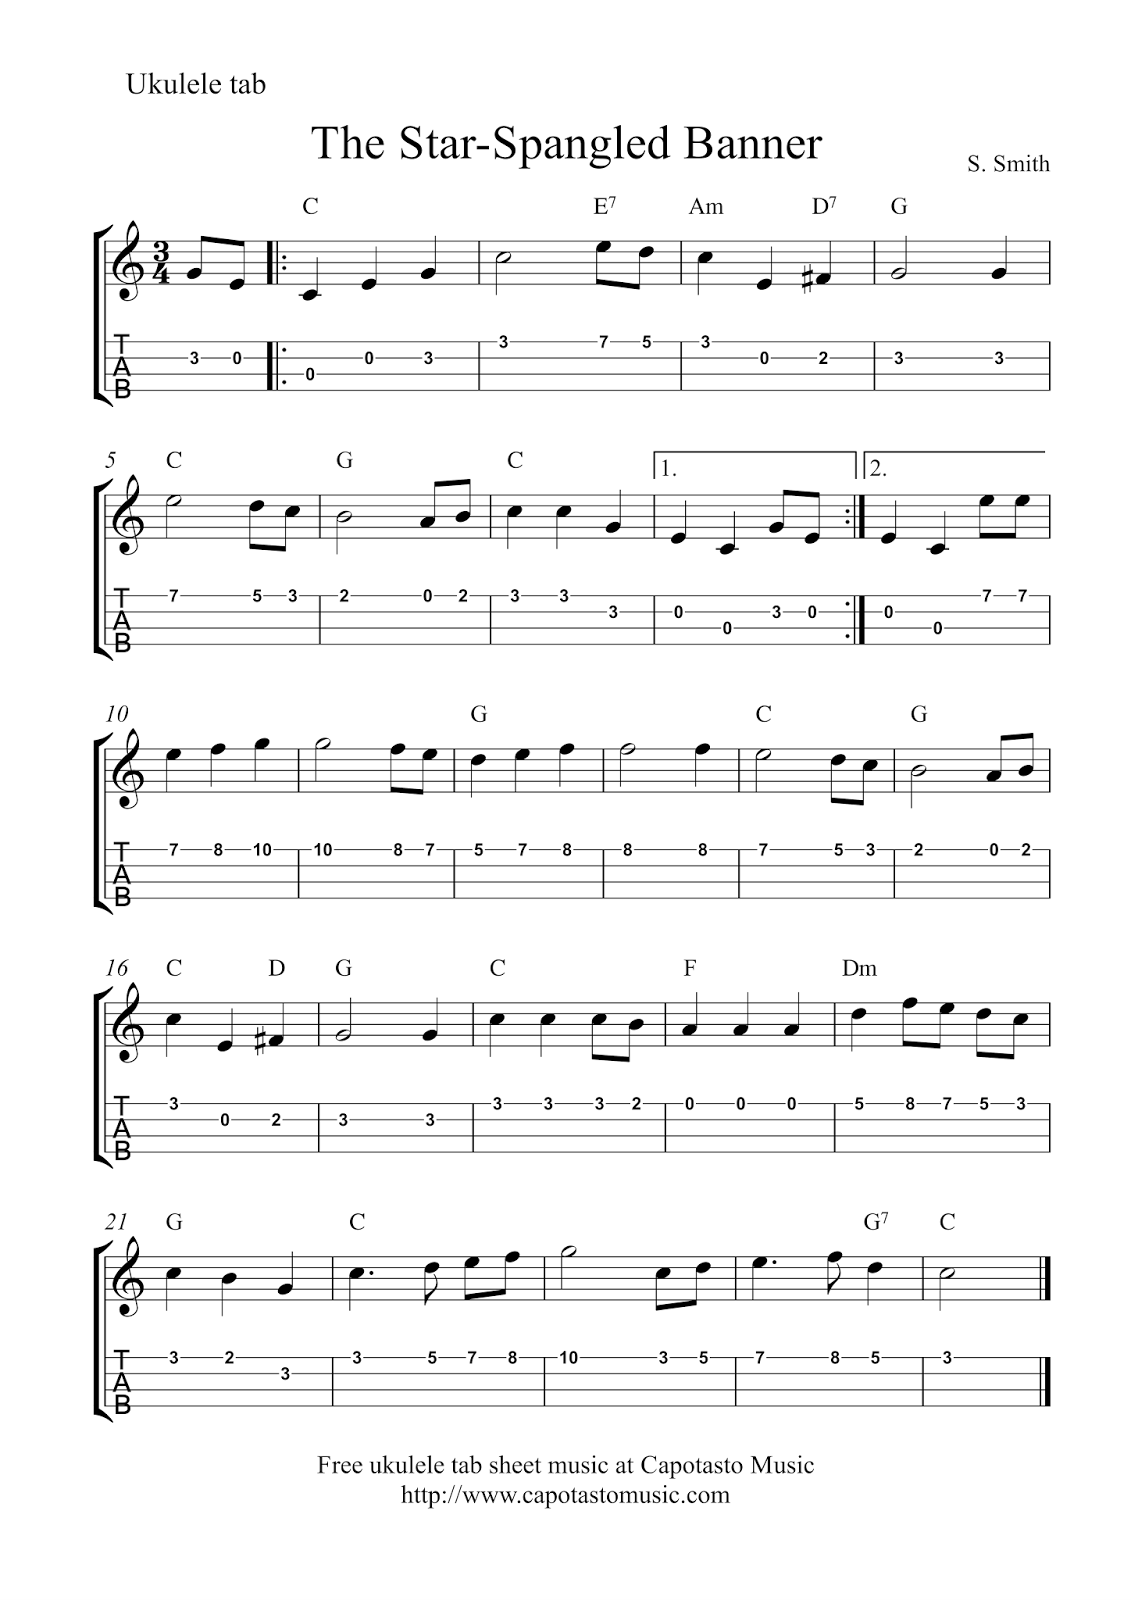 Free Printable Sheet Music: The Star-Spangled Banner | Free ukulele